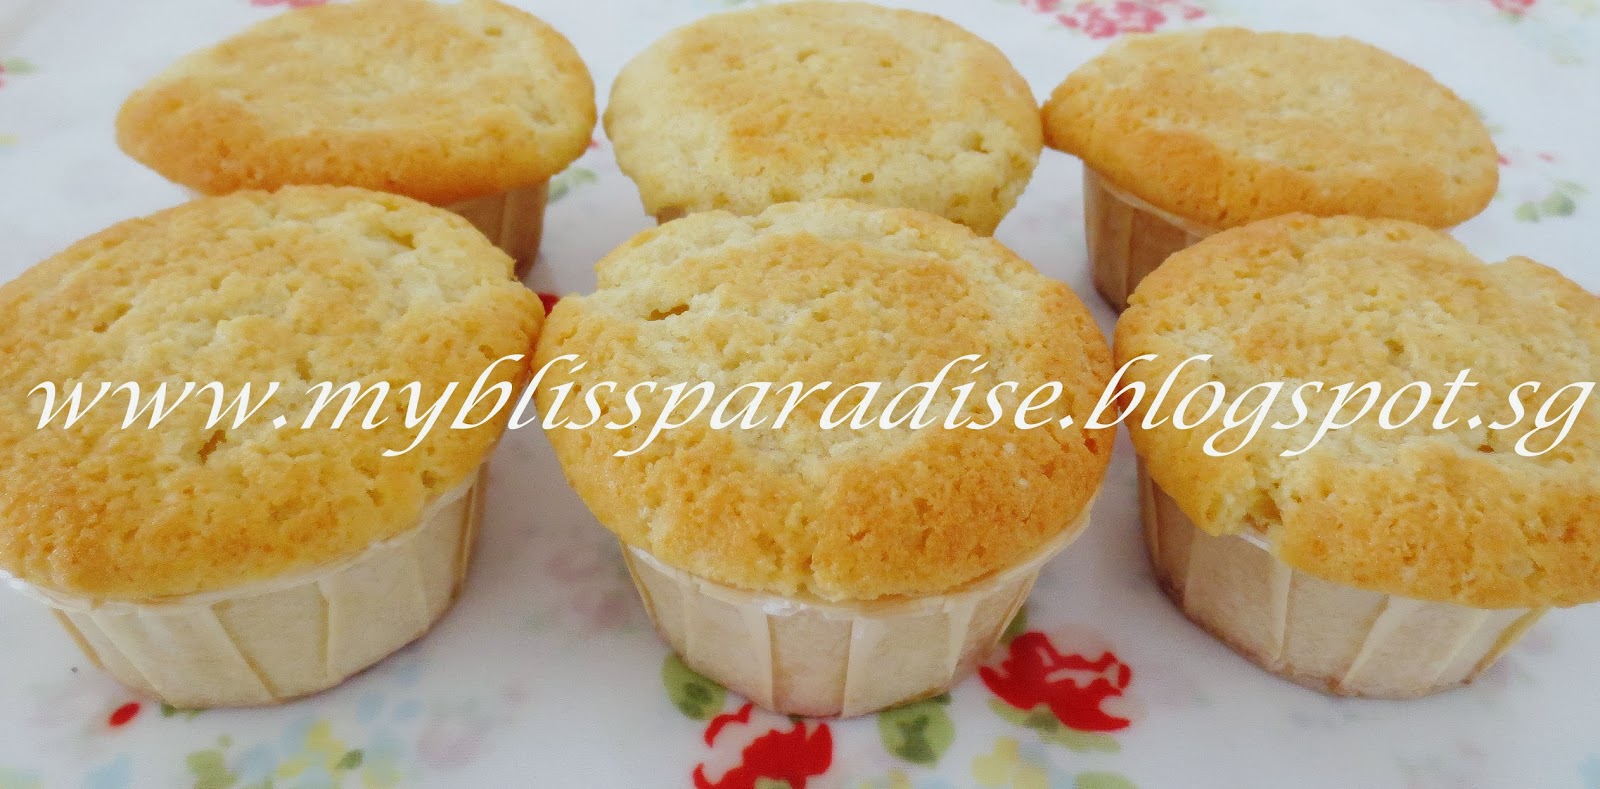 http://myblissparadise.blogspot.sg/2014/01/crispy-vanilla-cupcake-15-jan-14.html